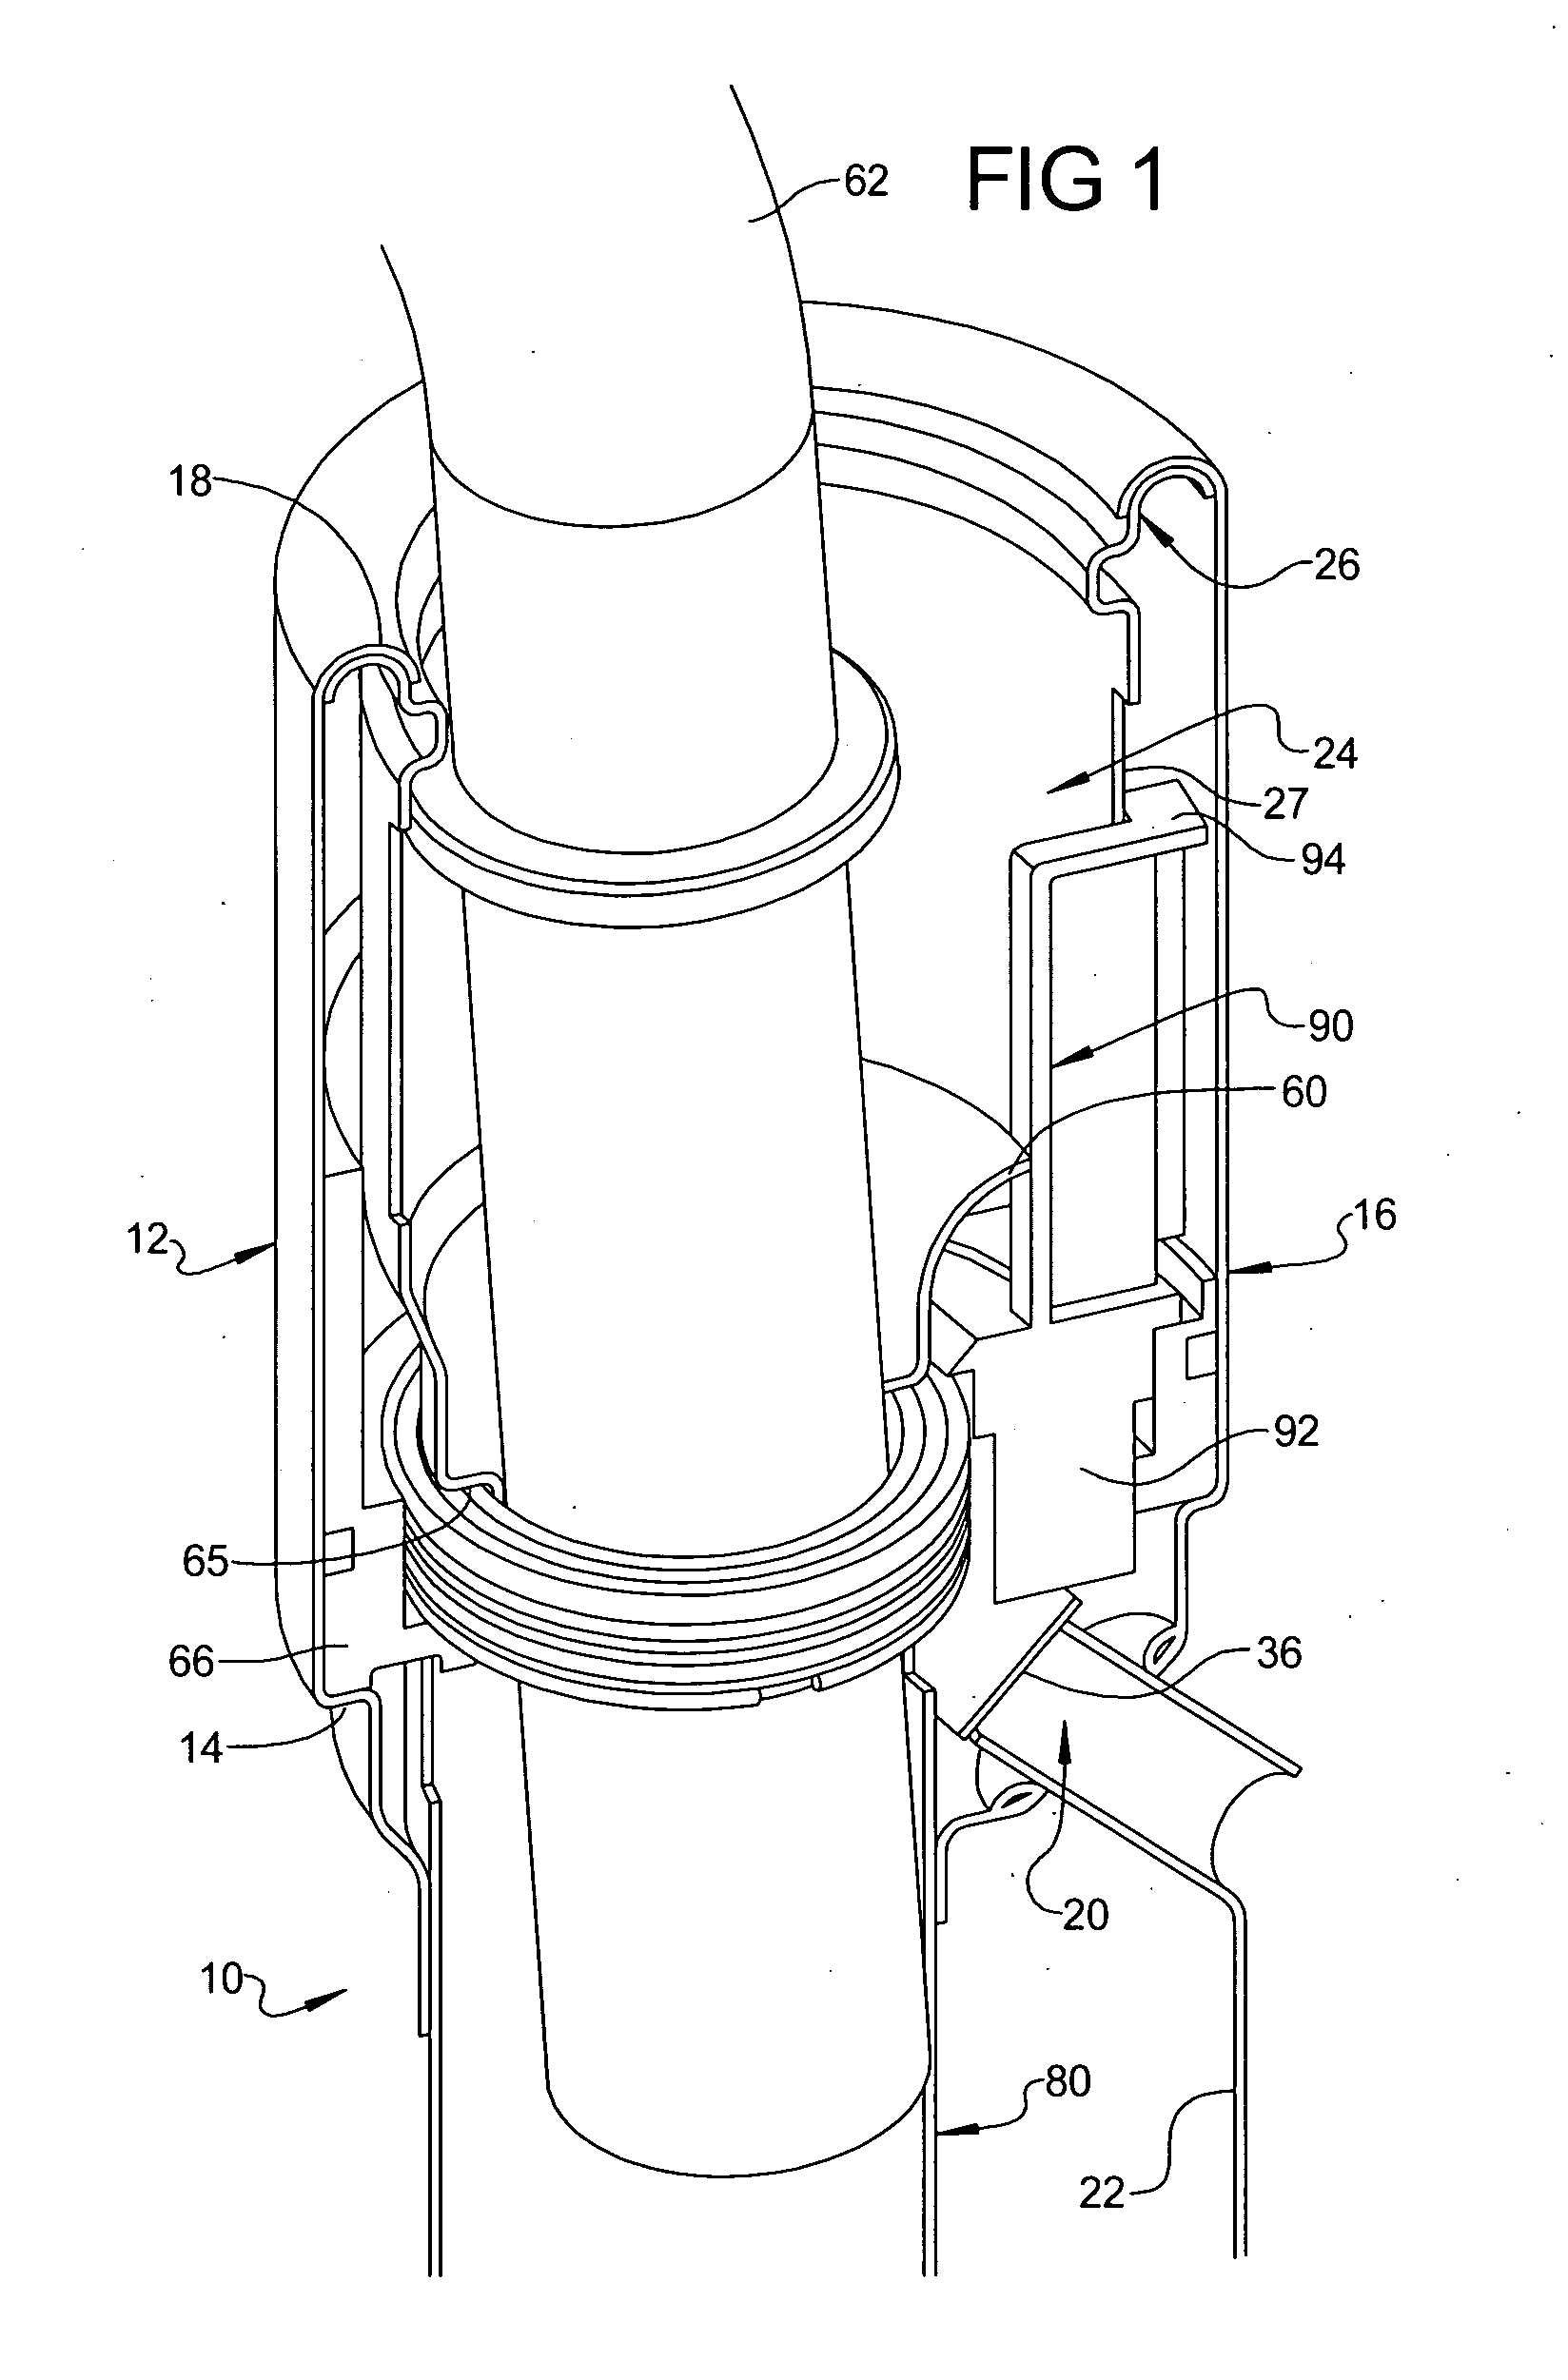 Filler tube assembly for a fuel vapor recirculation system